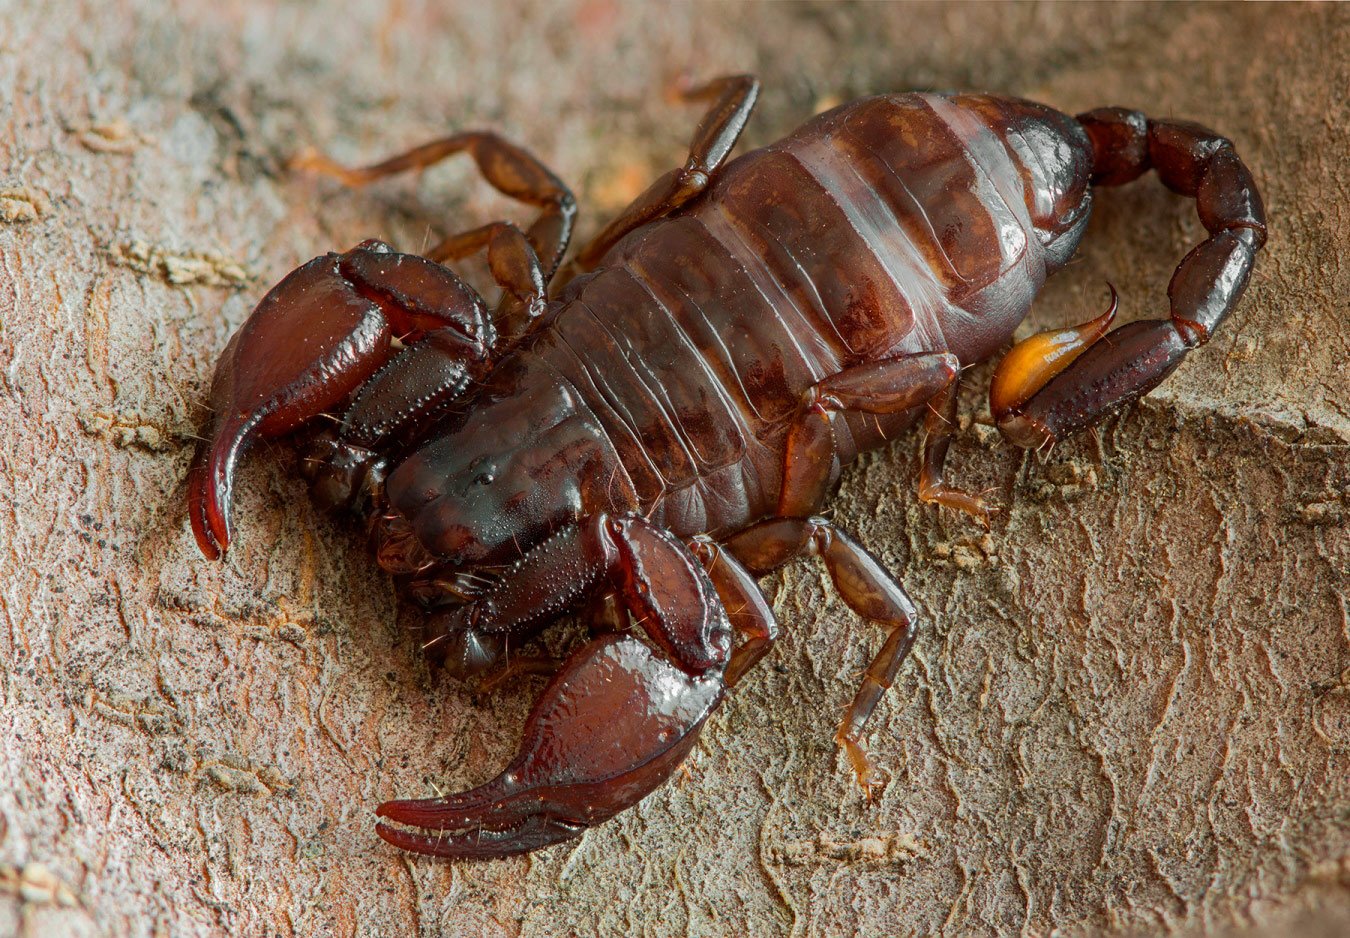 Pregnant female scorpion